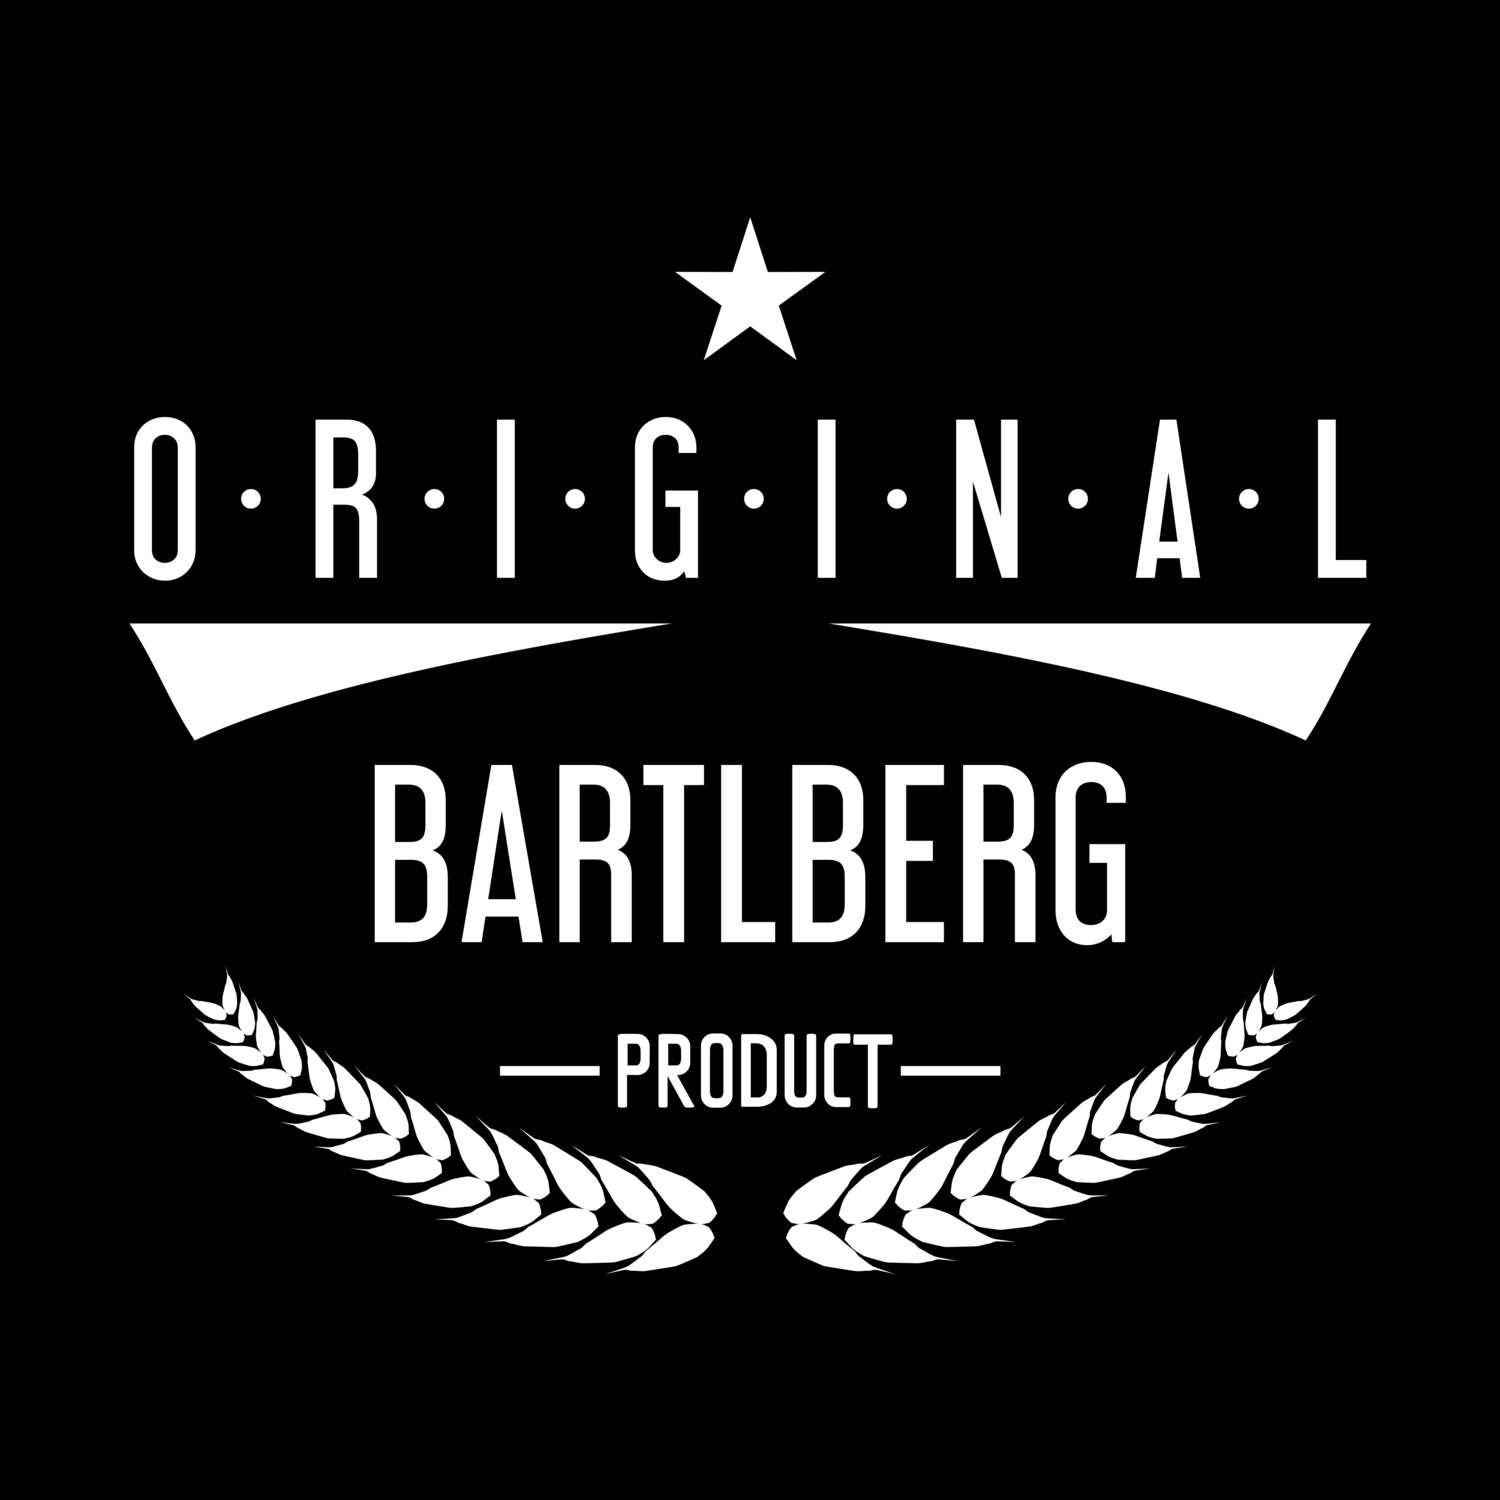 Bartlberg T-Shirt »Original Product«